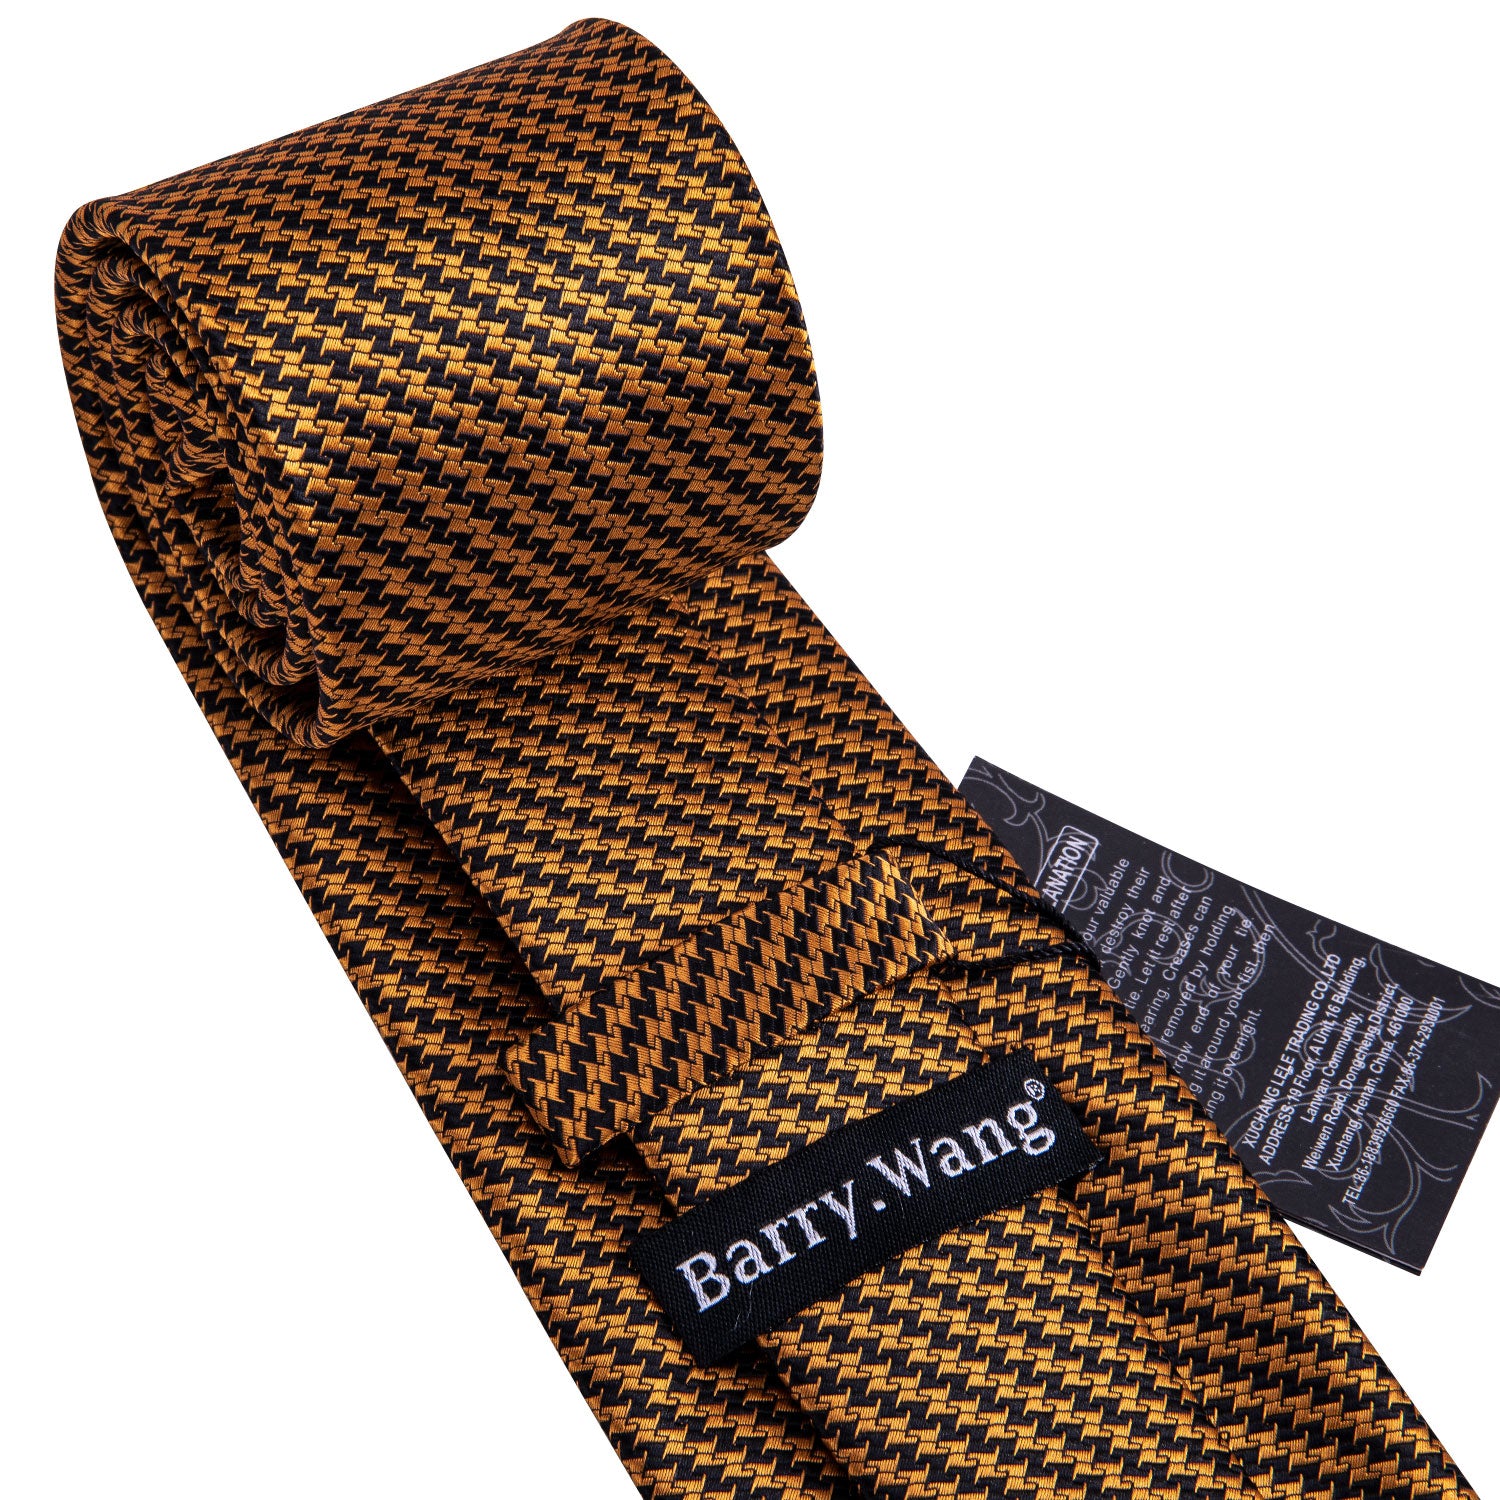 Golden Houndstooth Silk Fabric Tie Hanky Cufflinks Set